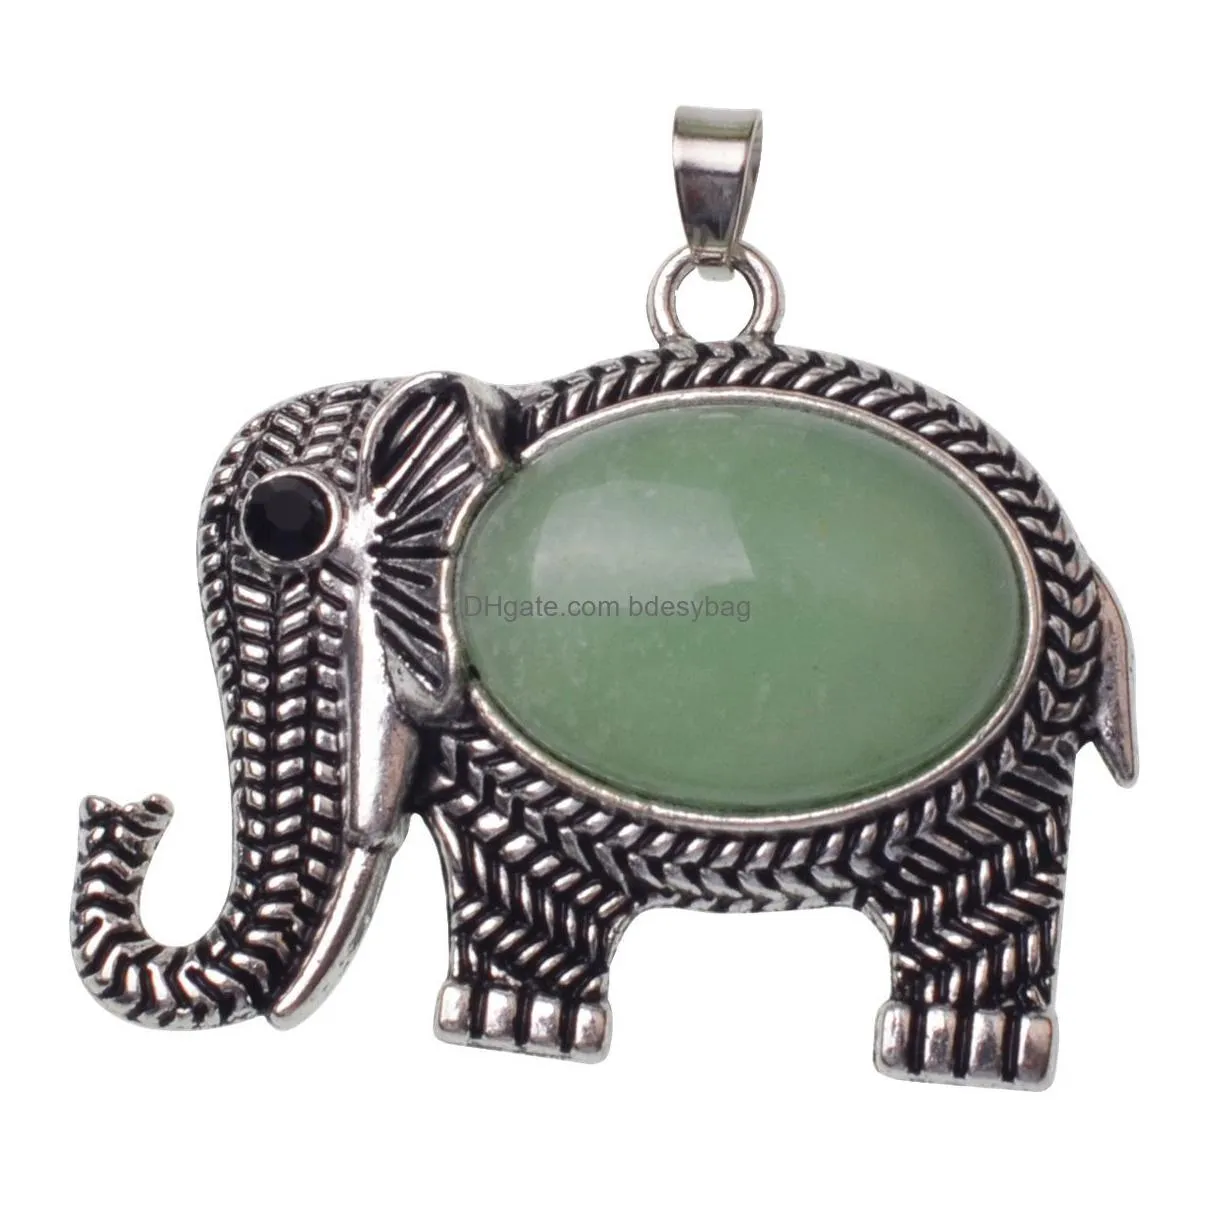 elephant alloy pendant jewelry antique exquisite carving elephant charm necklace women leather chain